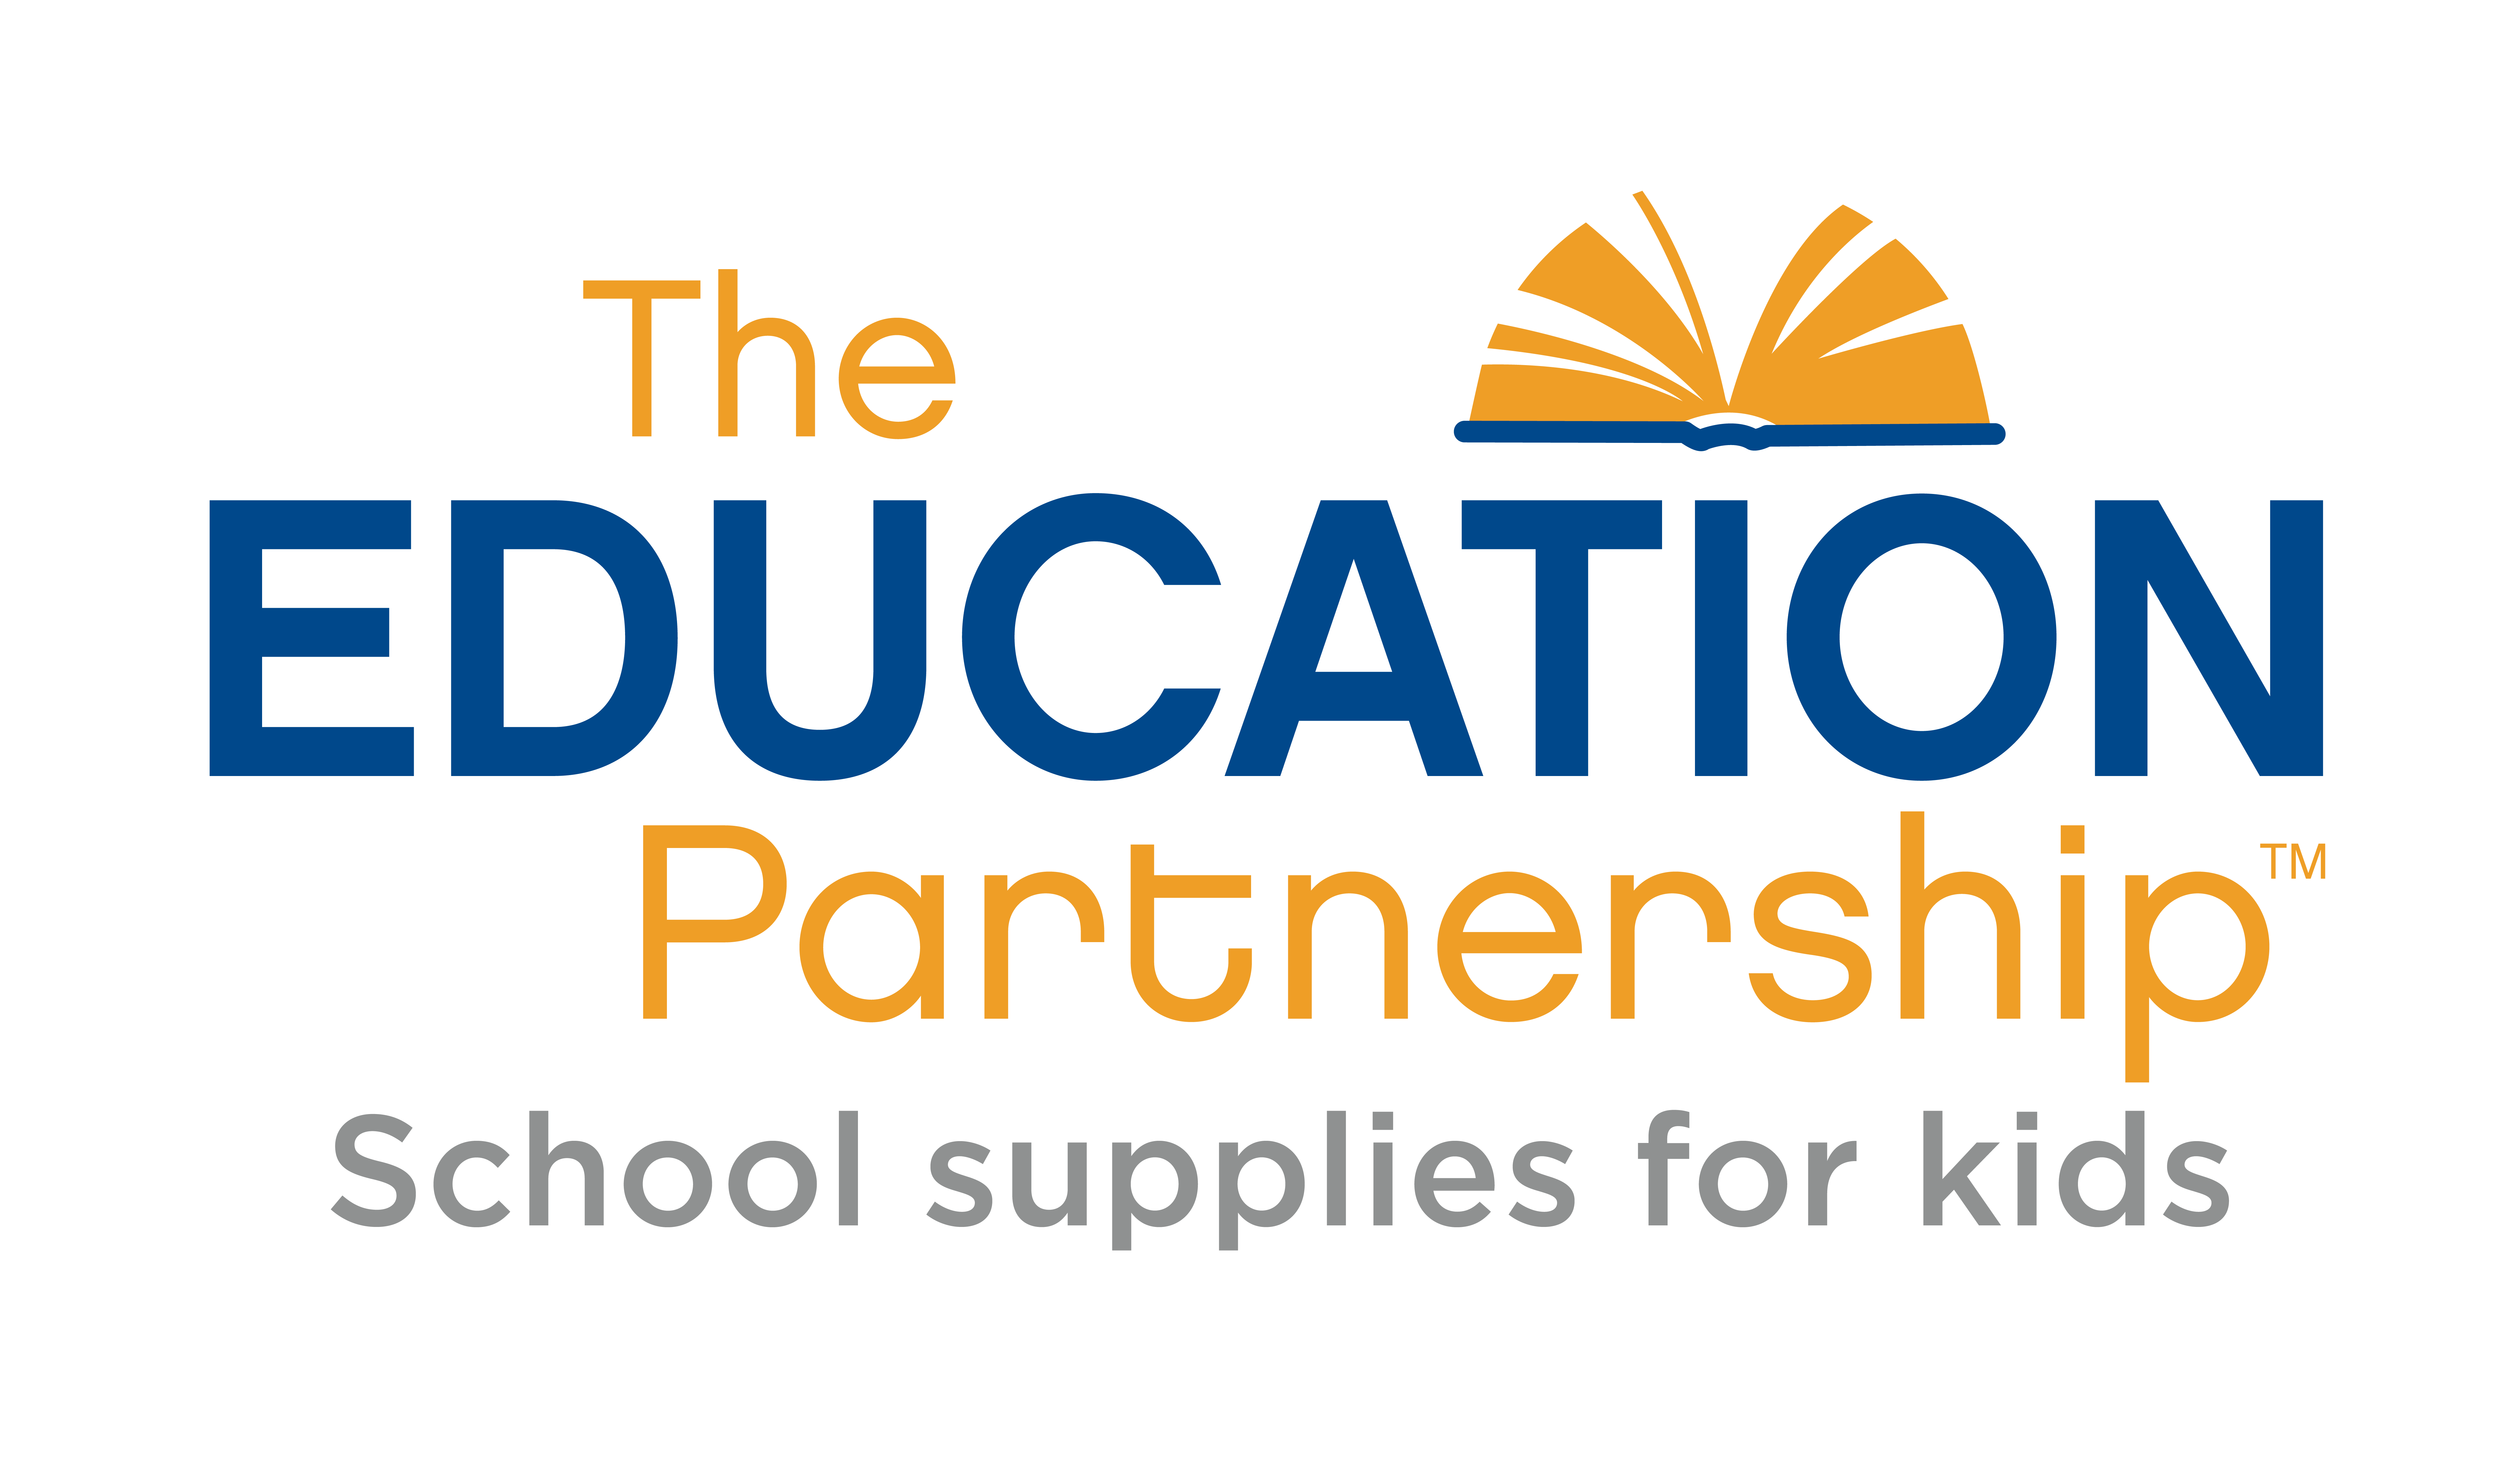 The Education Partnership